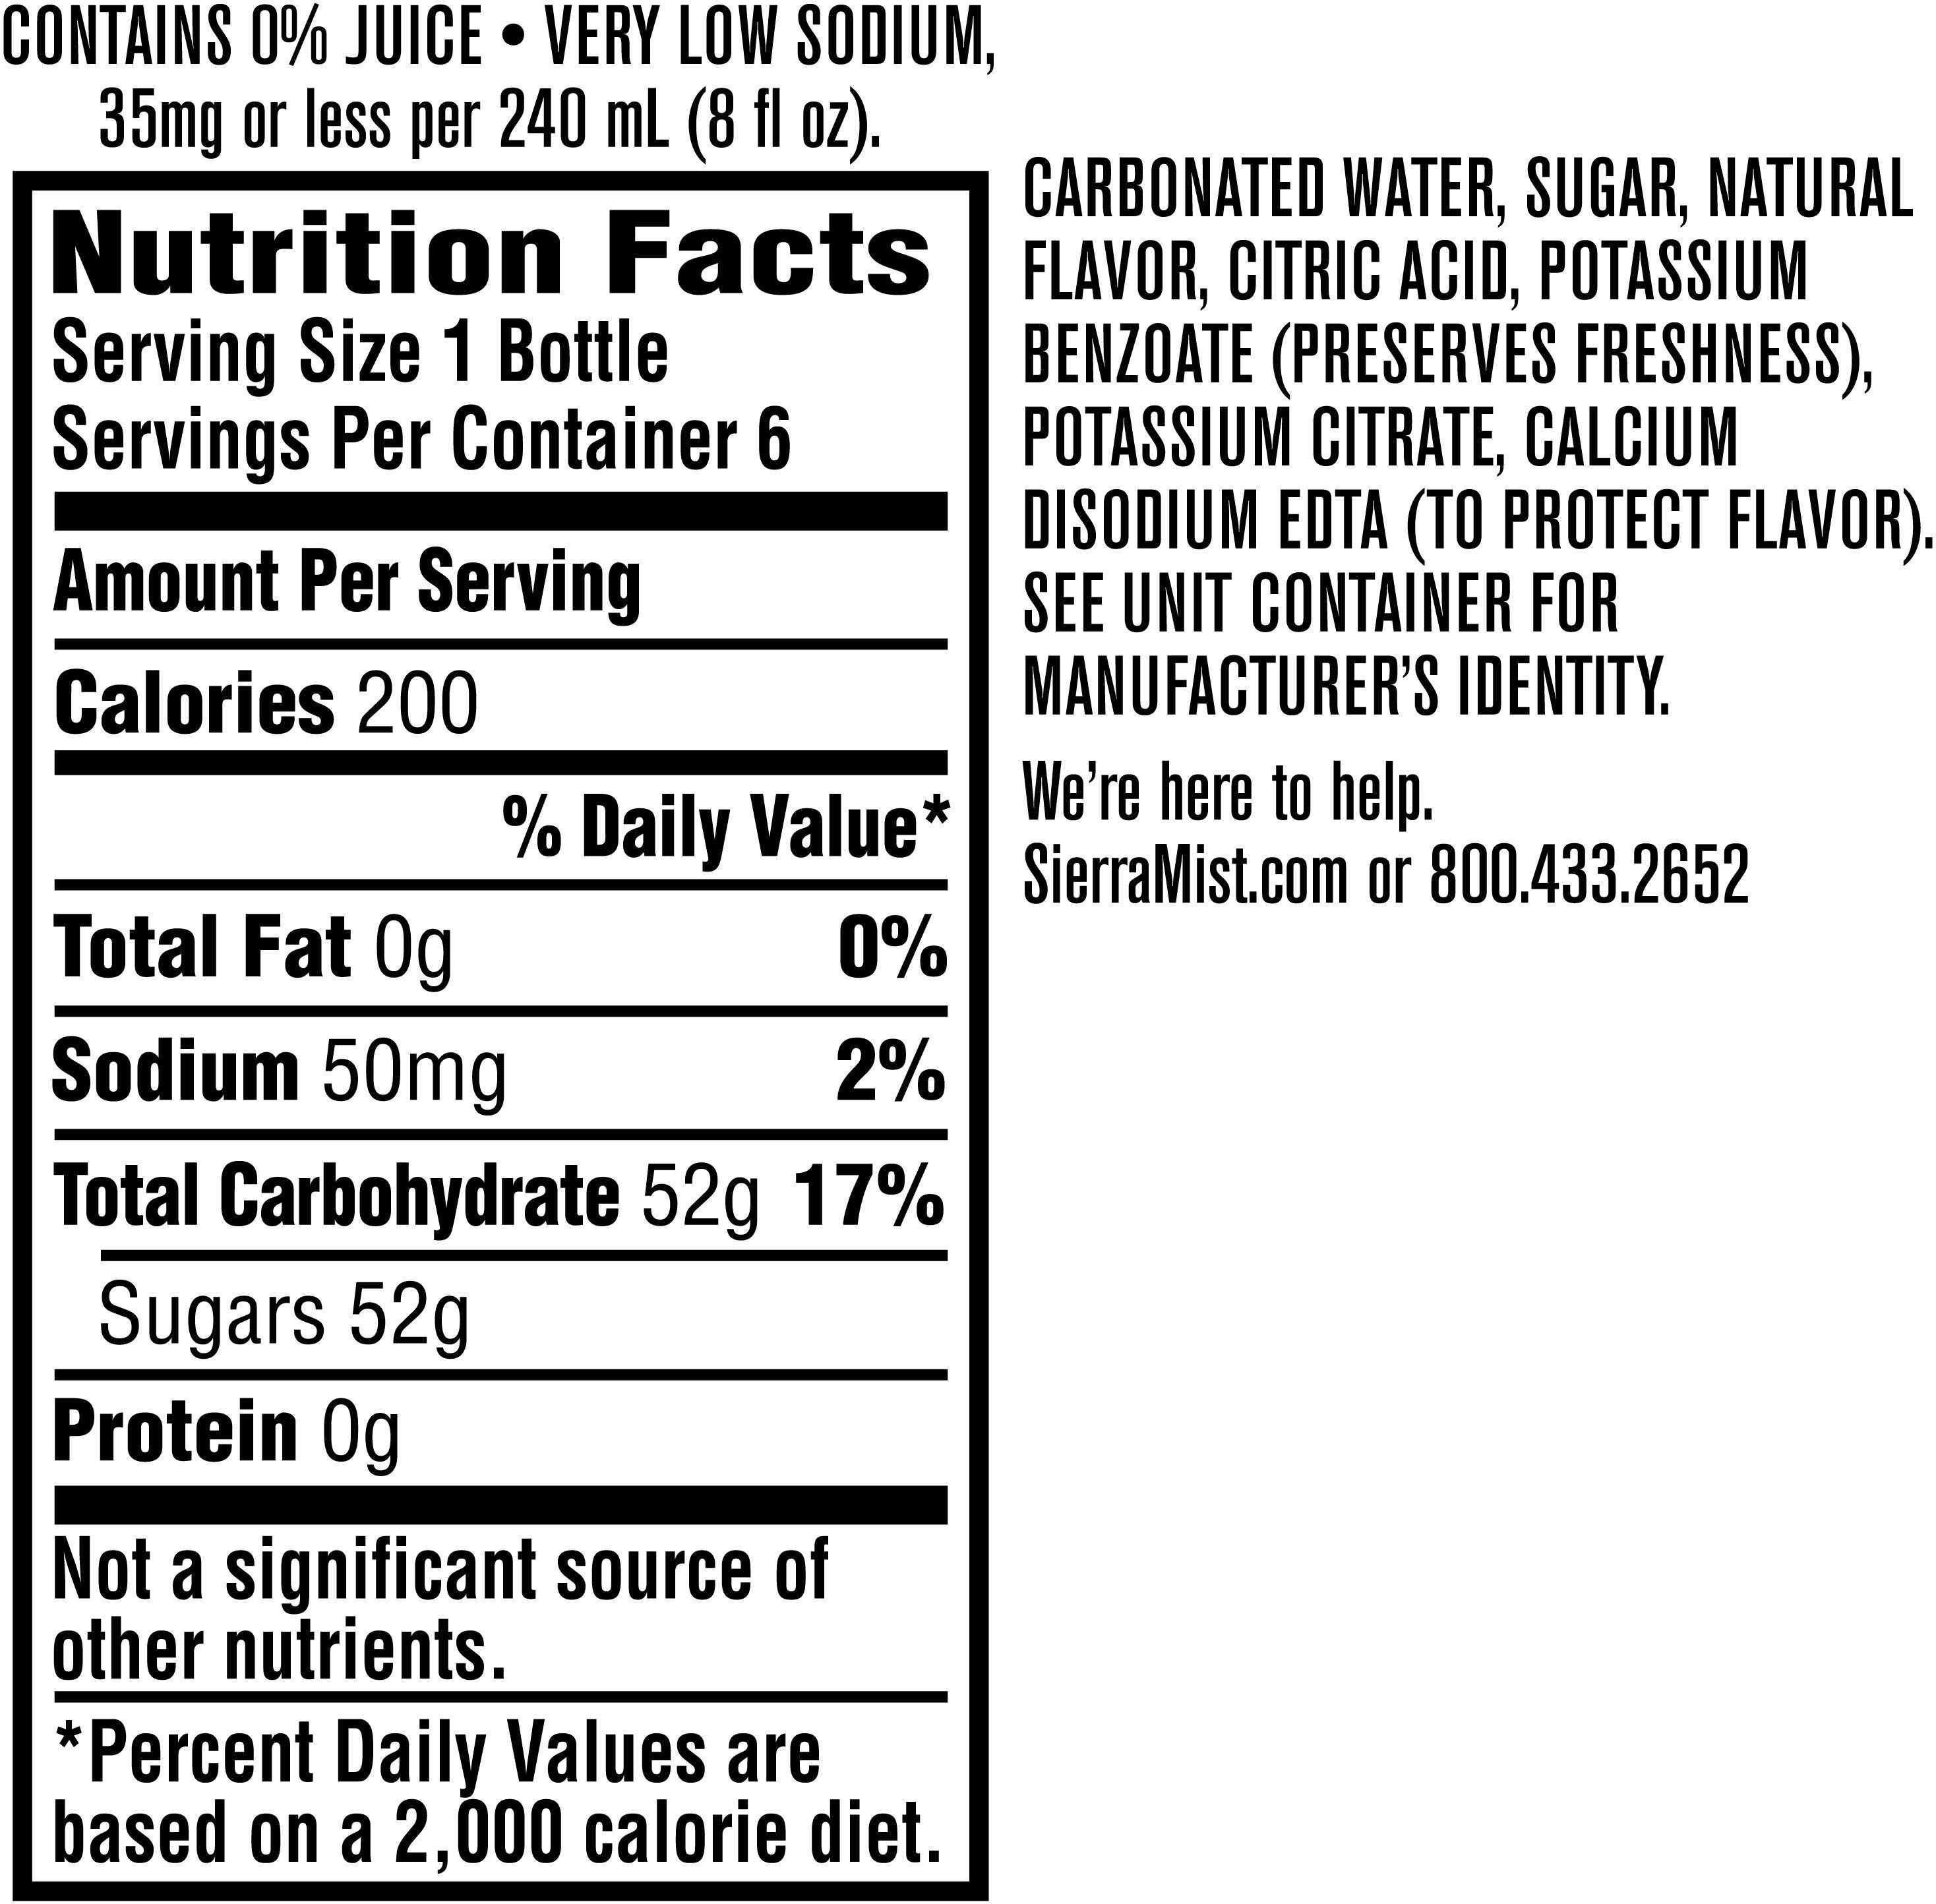 Image describing nutrition information for product Sierra Mist